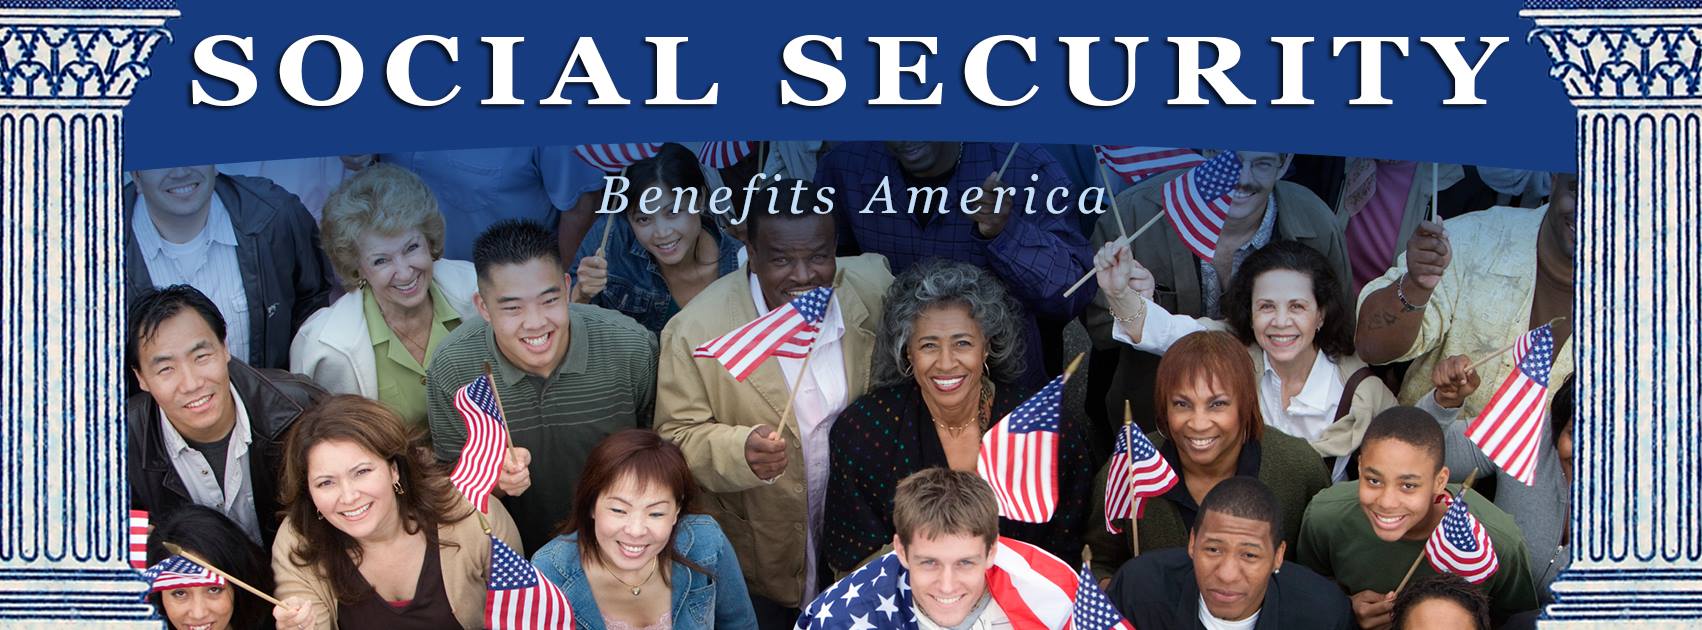 Social Security Benefits America